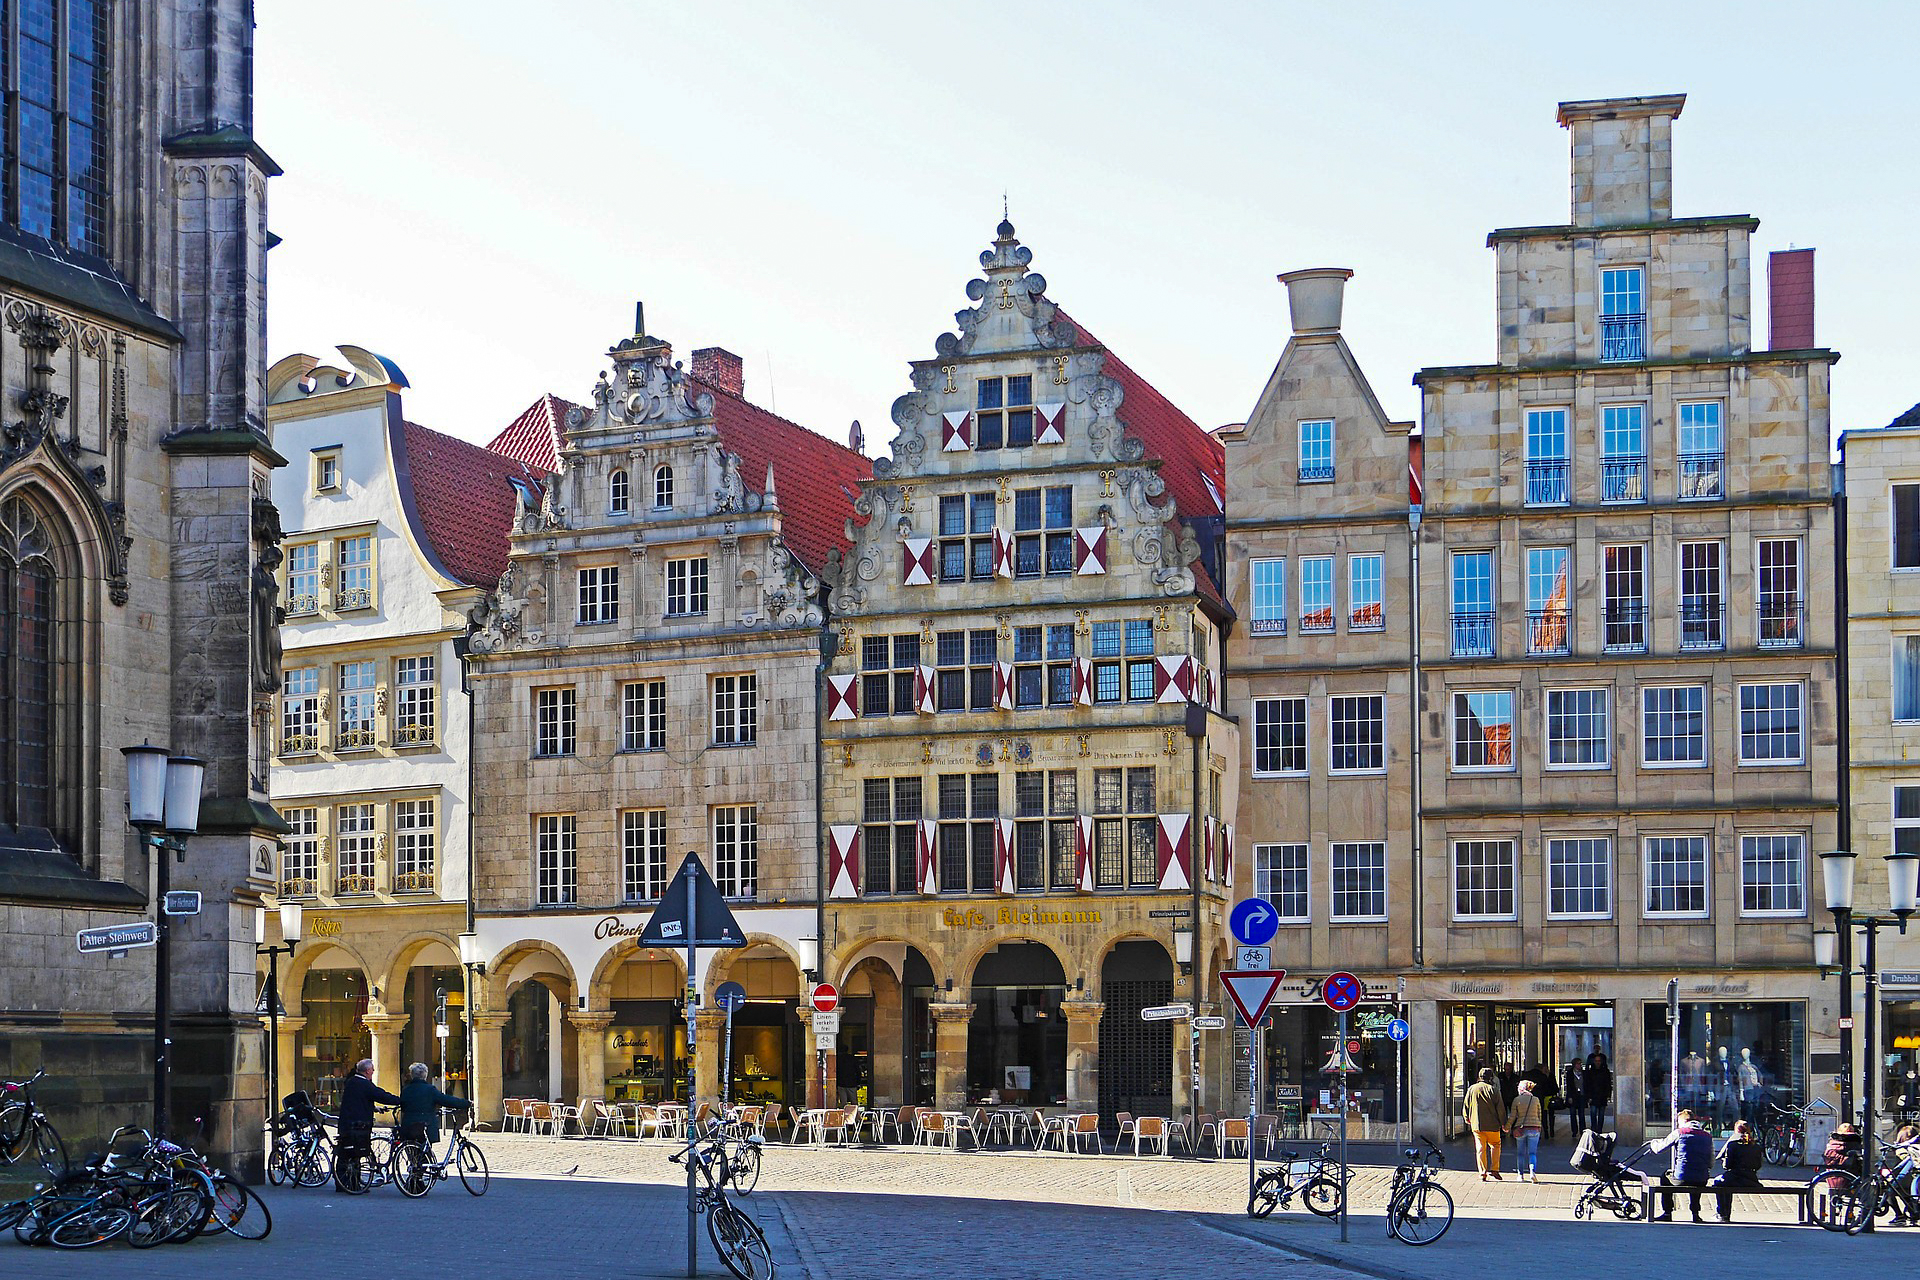 Innenstadt in Münster